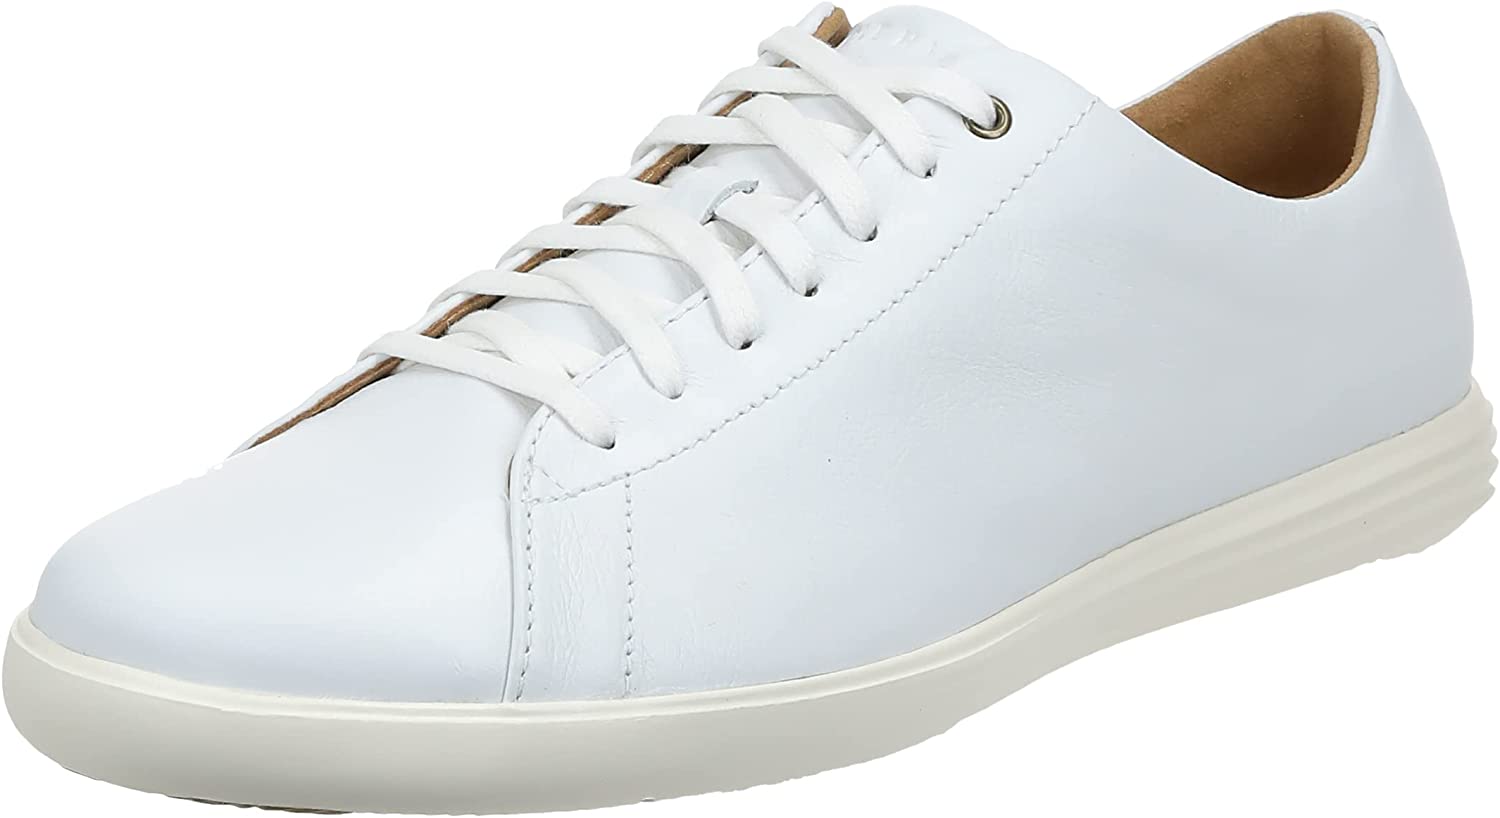 Cole Haan Mens Grand Crosscourt II Leather Sneaker - White - 12